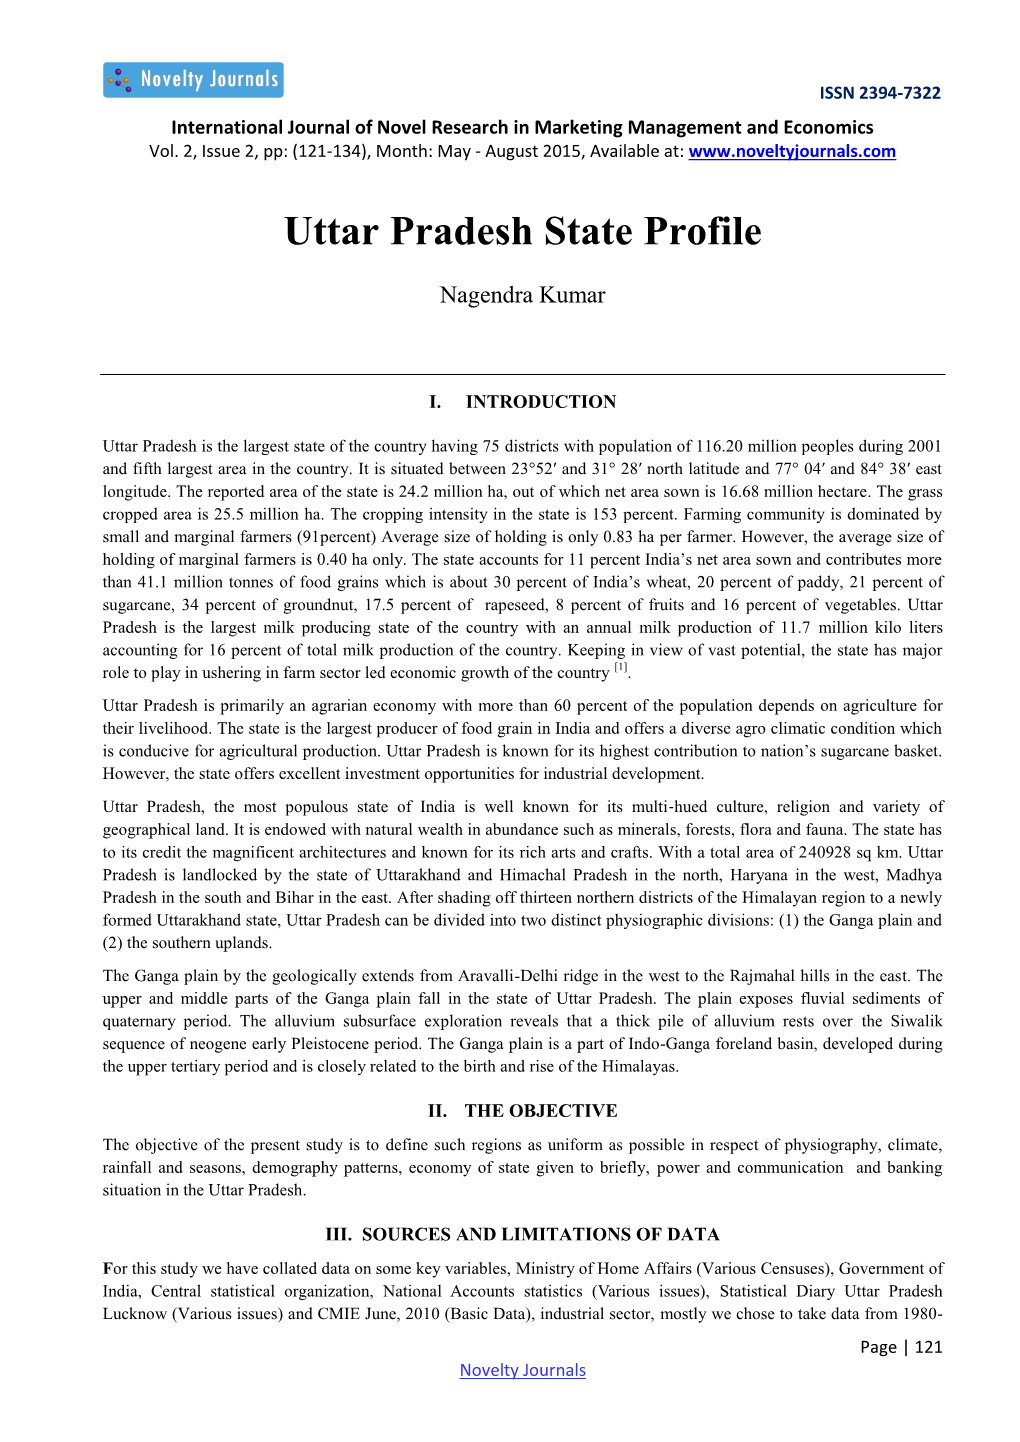 Uttar Pradesh State Profile